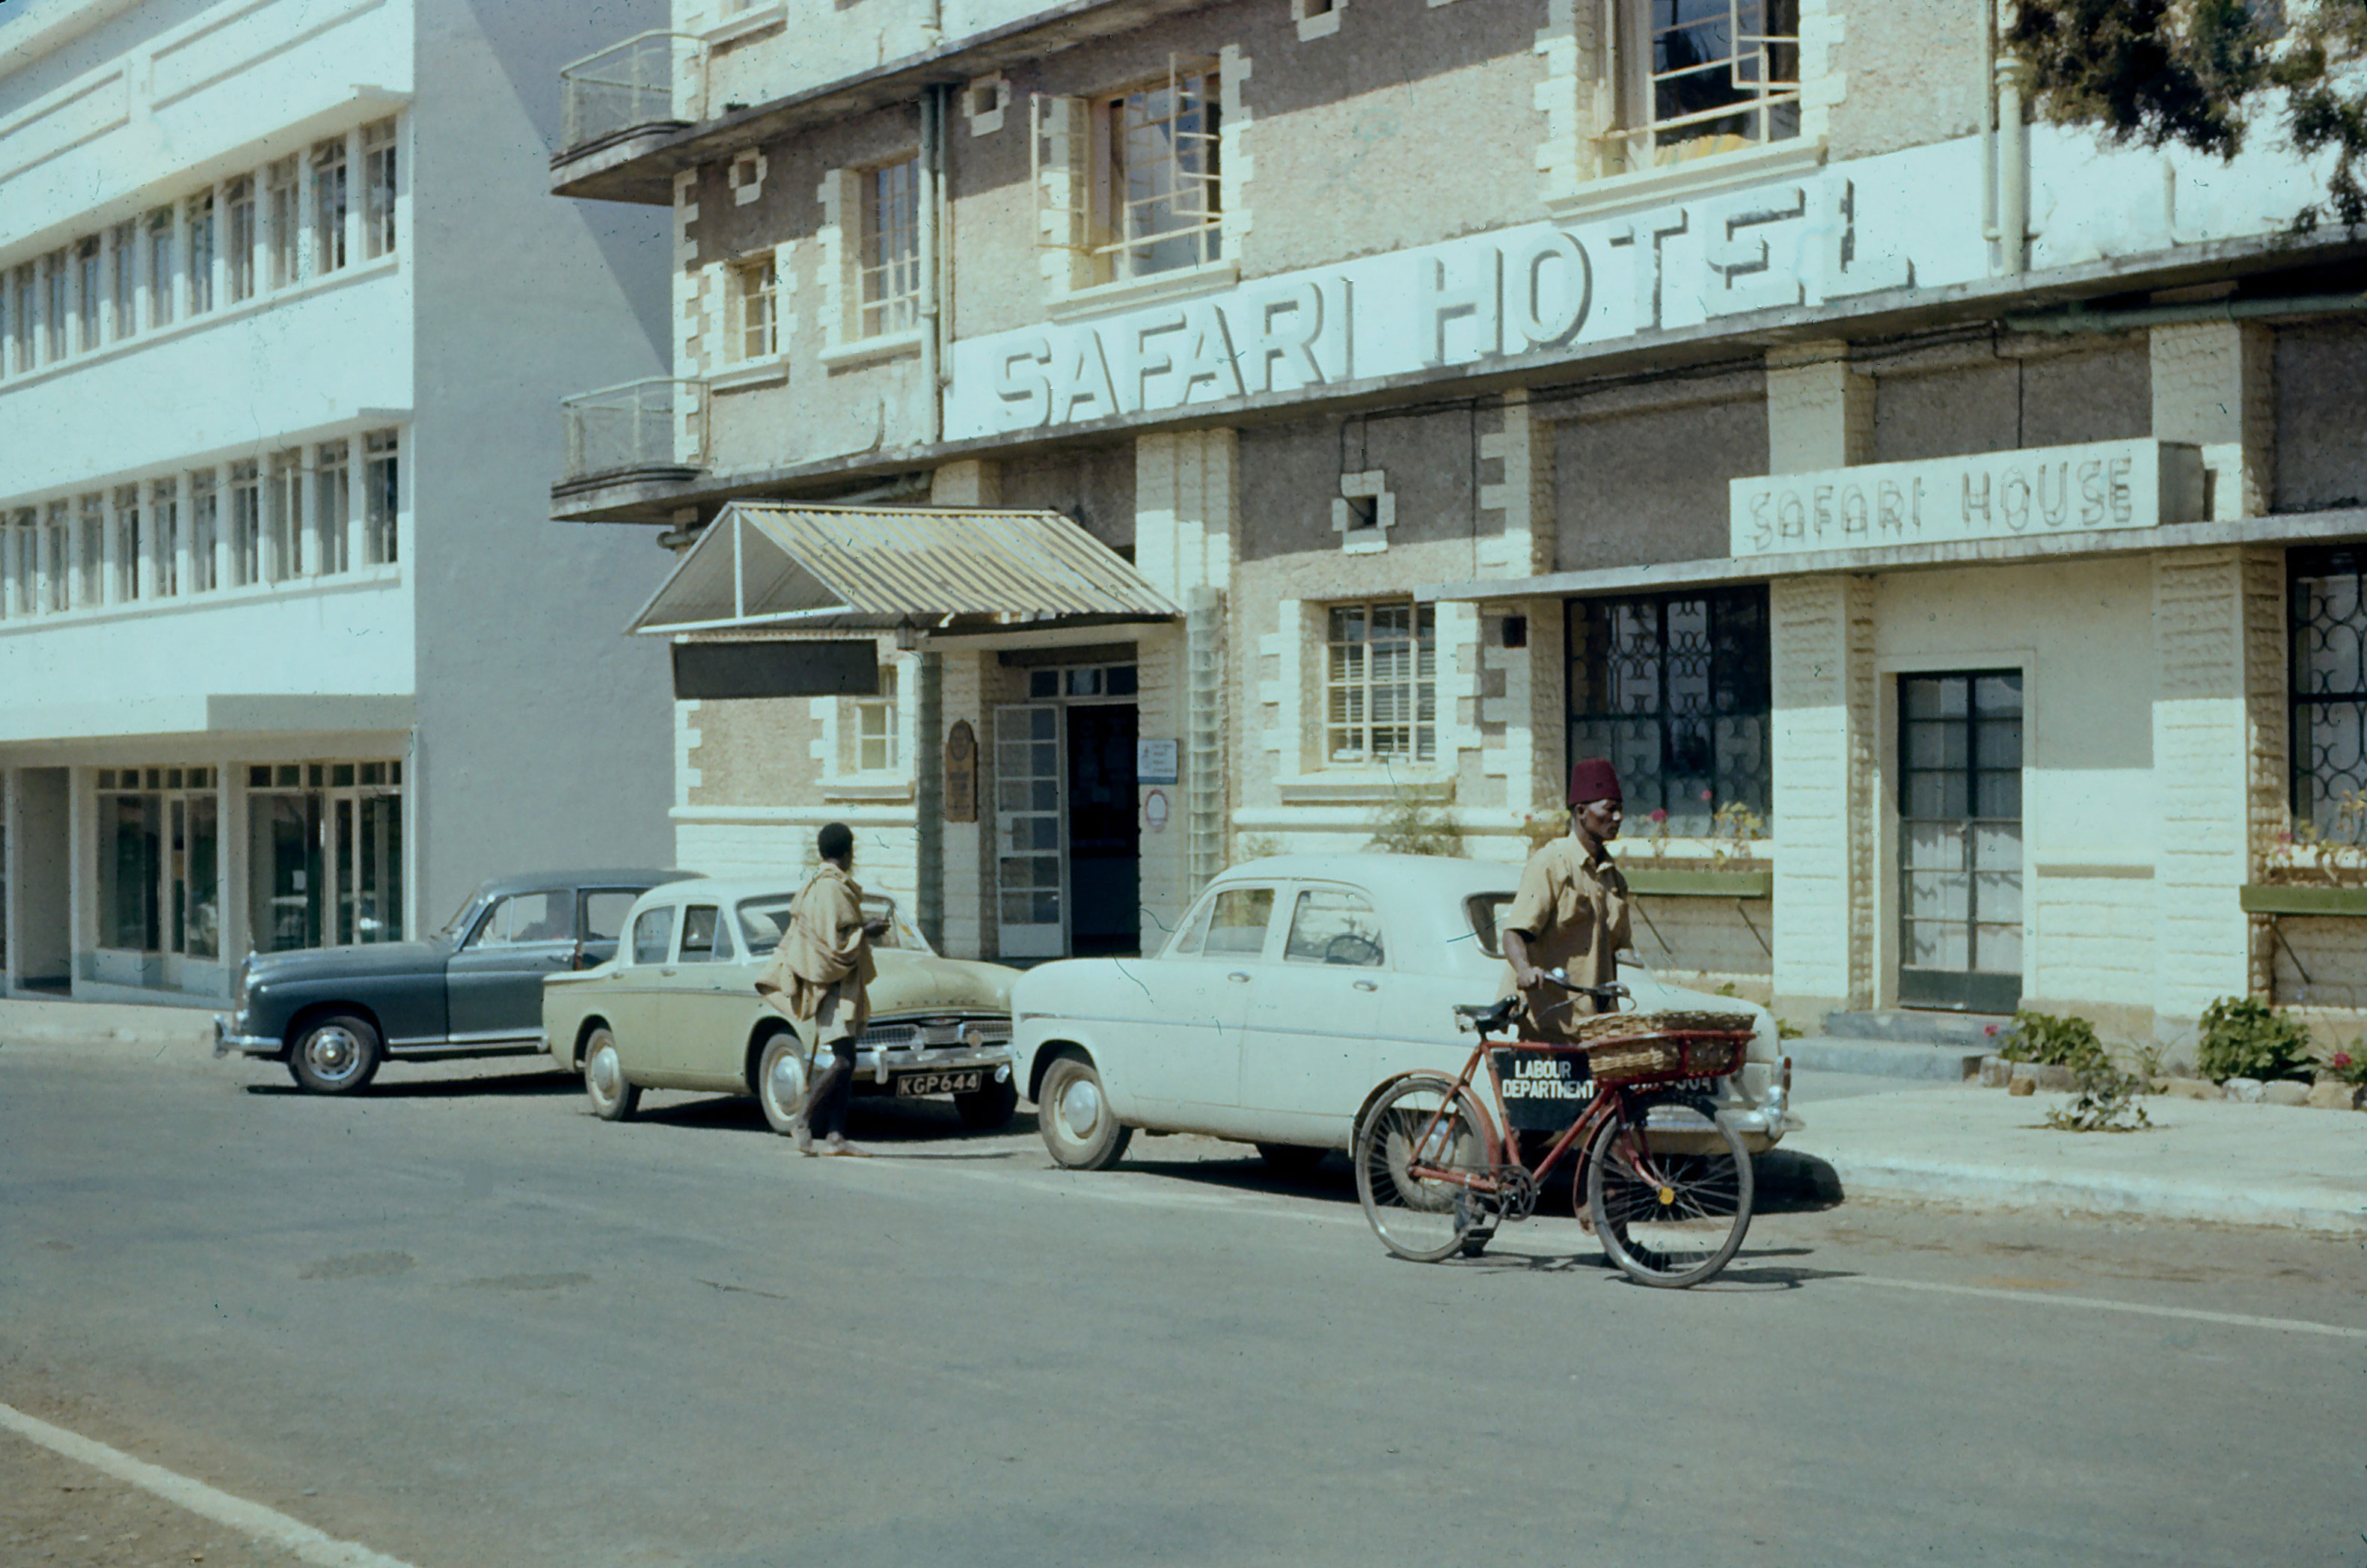 arusha_safari_hotel_1961.jpg